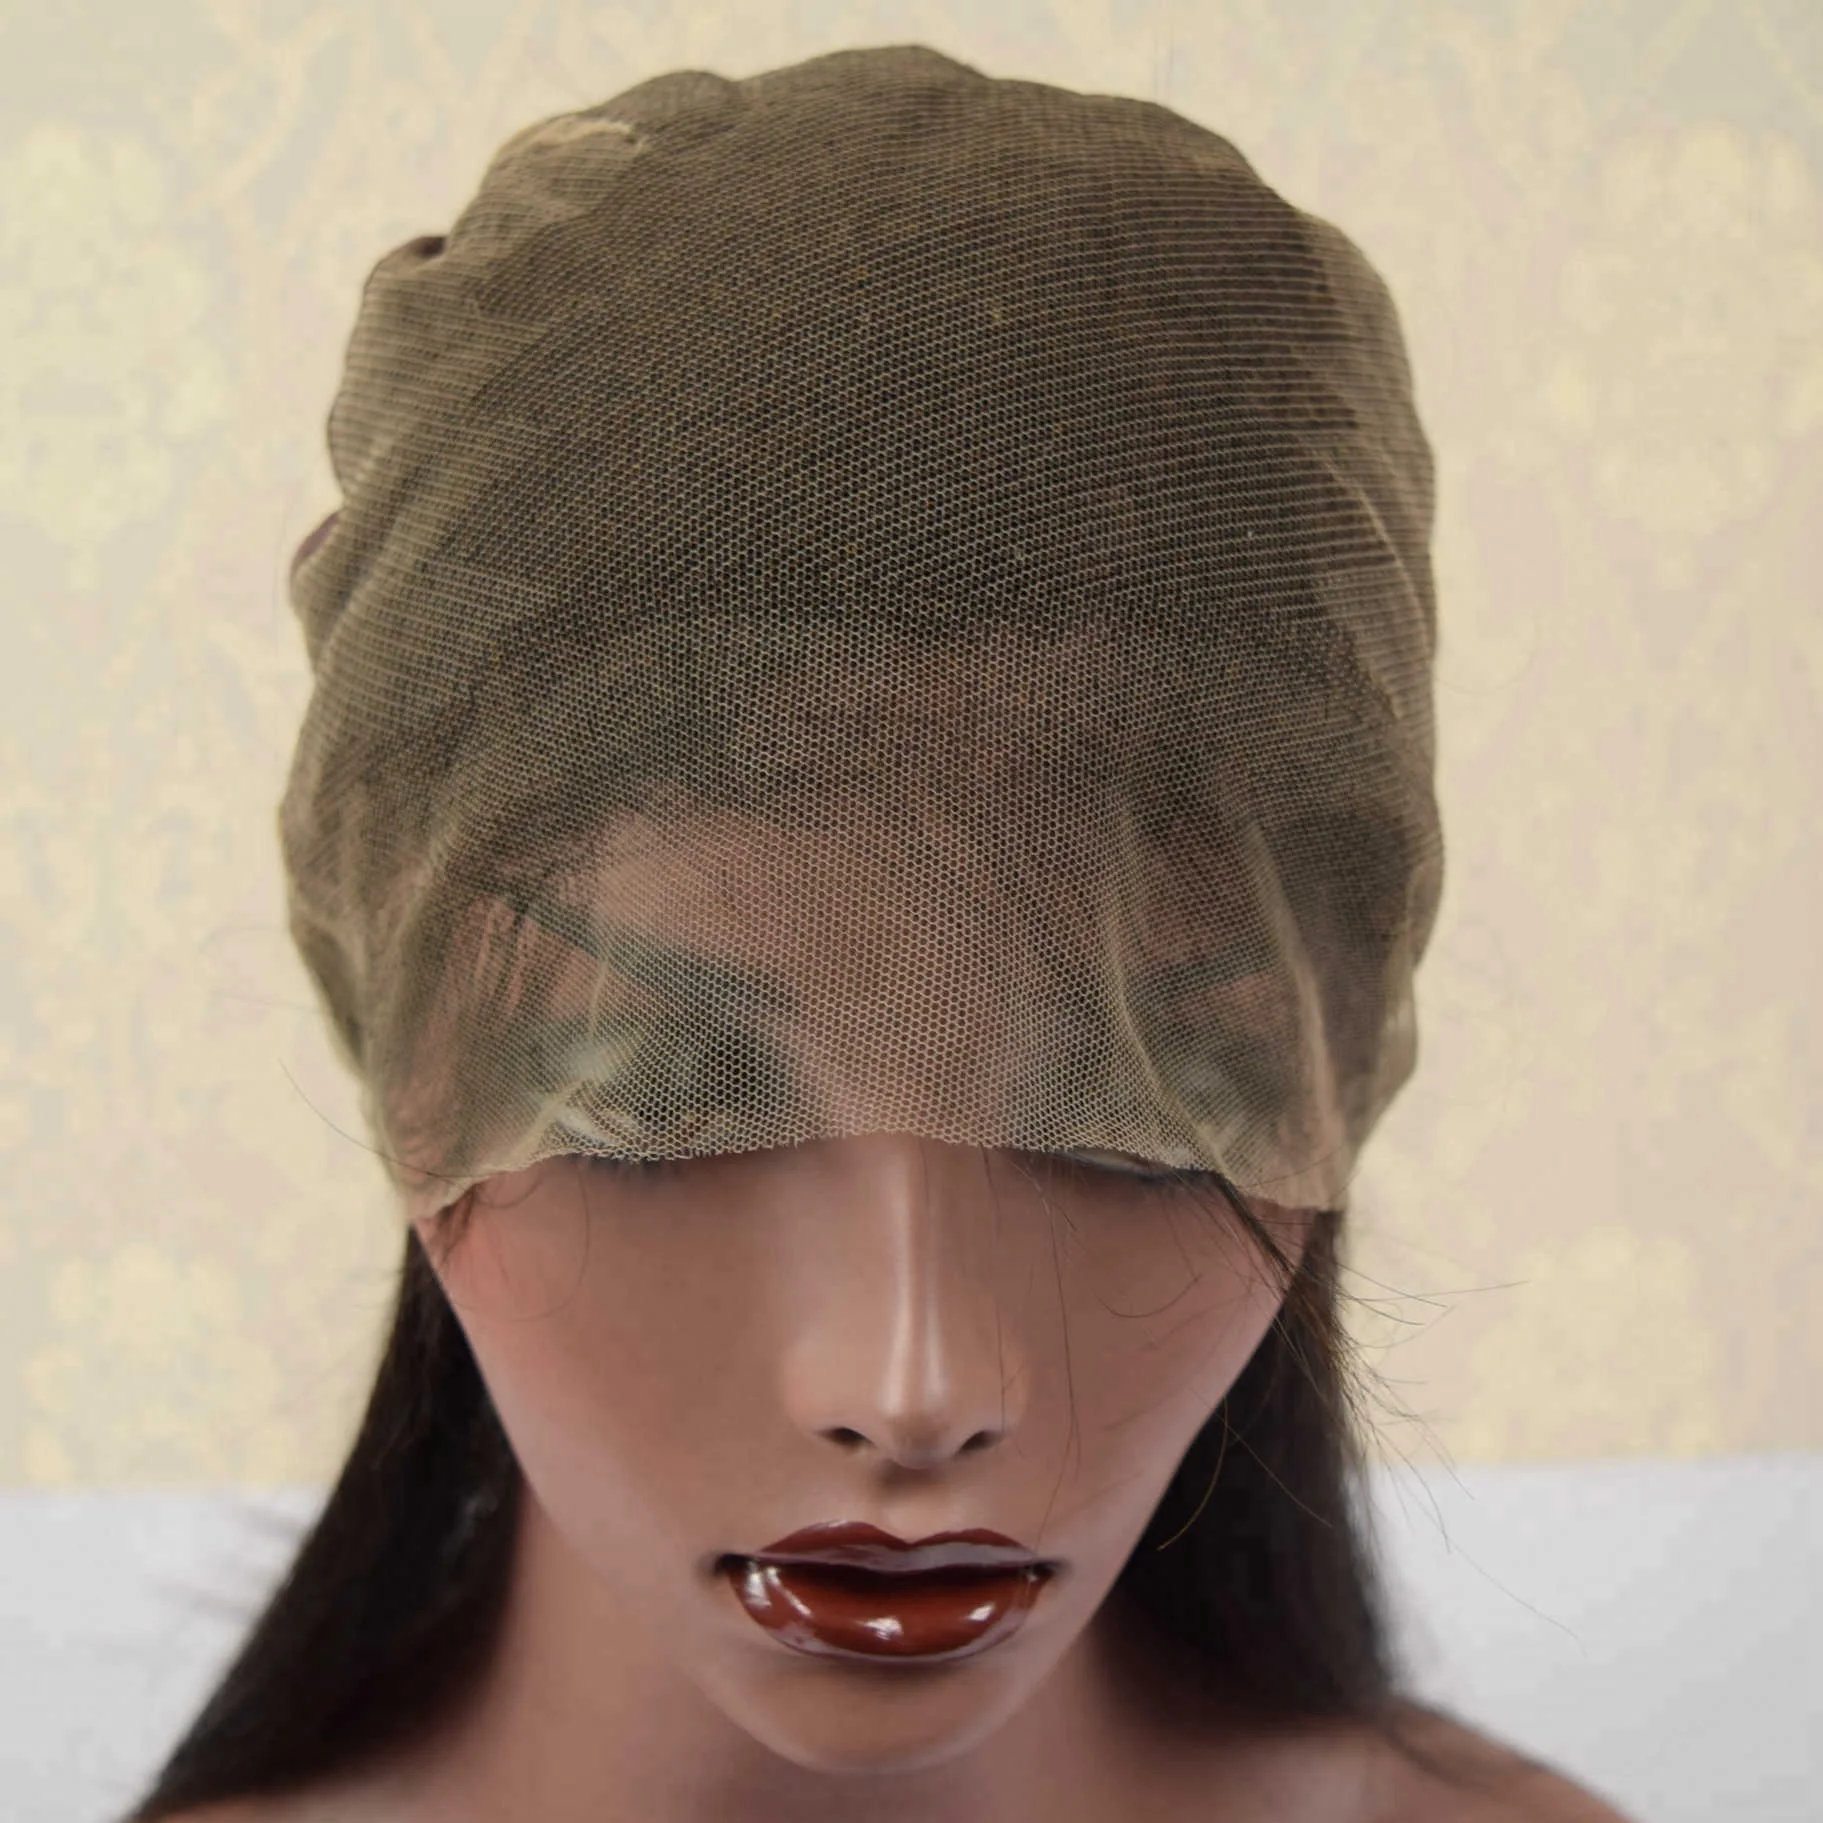 

Wholesale Alibaba Stock Silky Straight Virgin Brazilian Human Hair Full Lace Wigs For Black Women Cuticle Aligned Wig